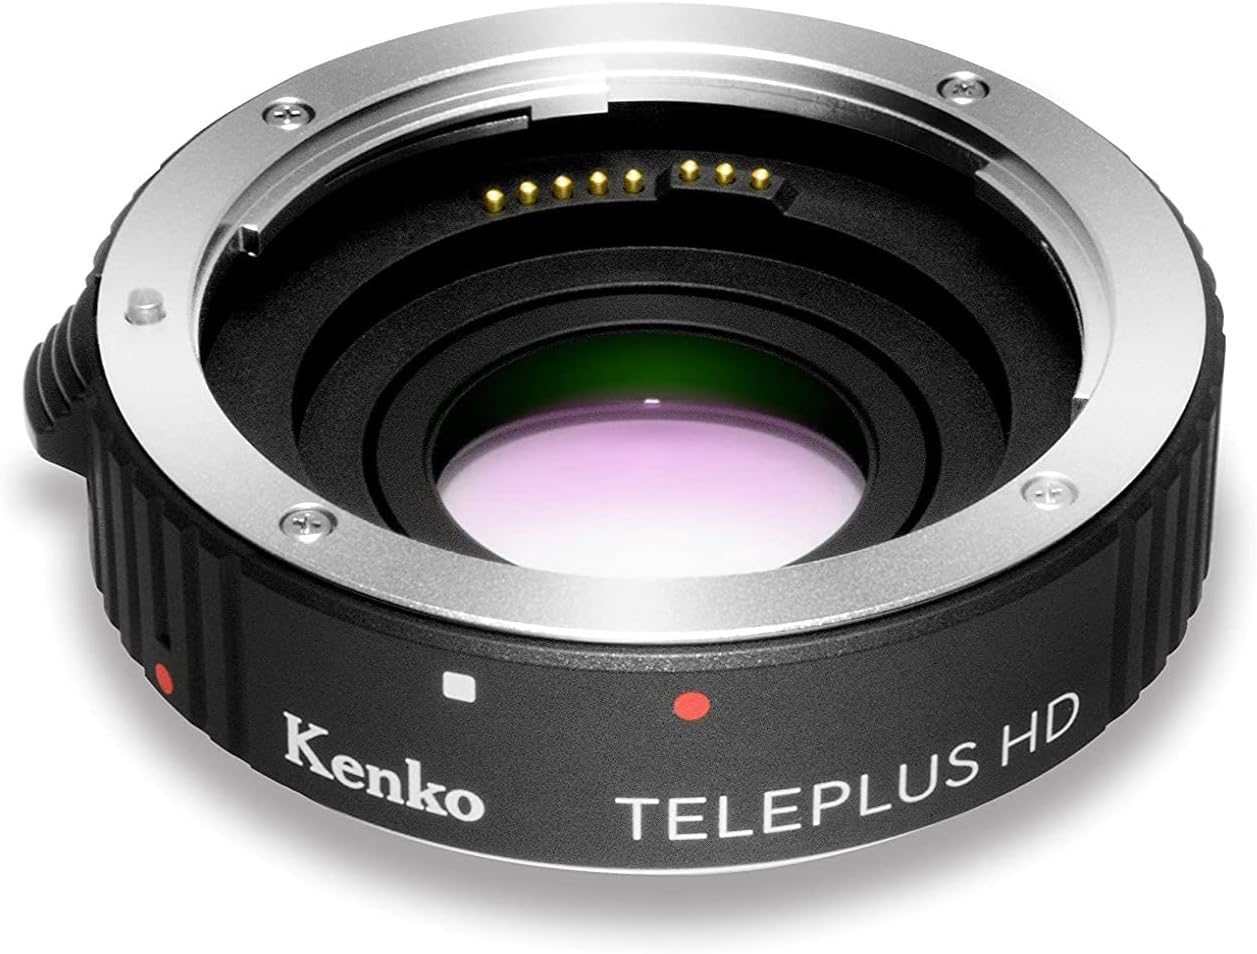 KENKO - Teleplus 1.4x HD DGX Teleconverter for Canon